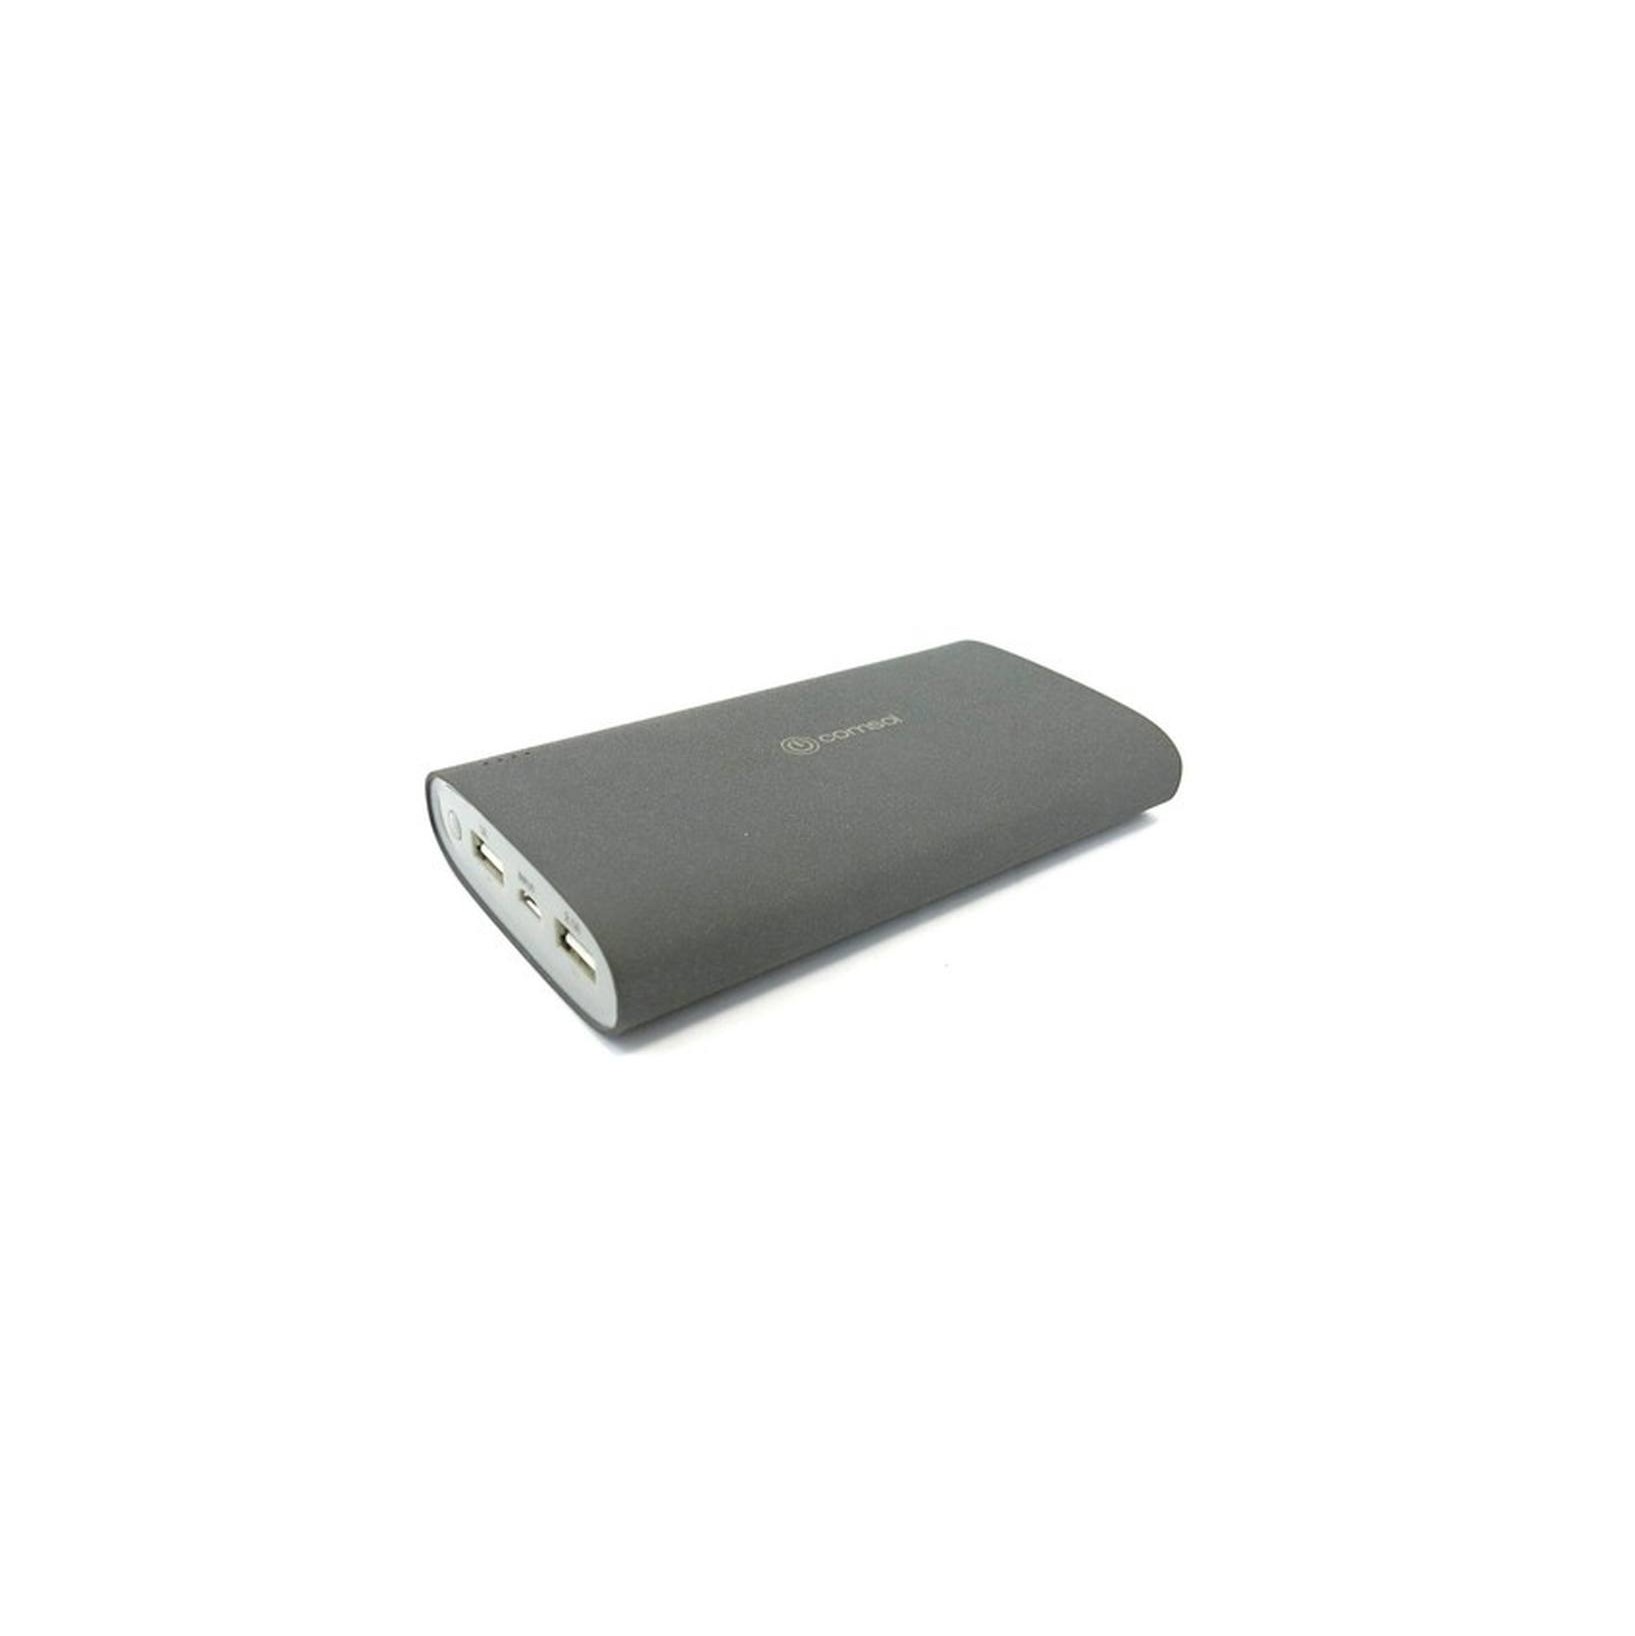 Black Travel Mi 50000mah Power Bank Portable Battery Charger